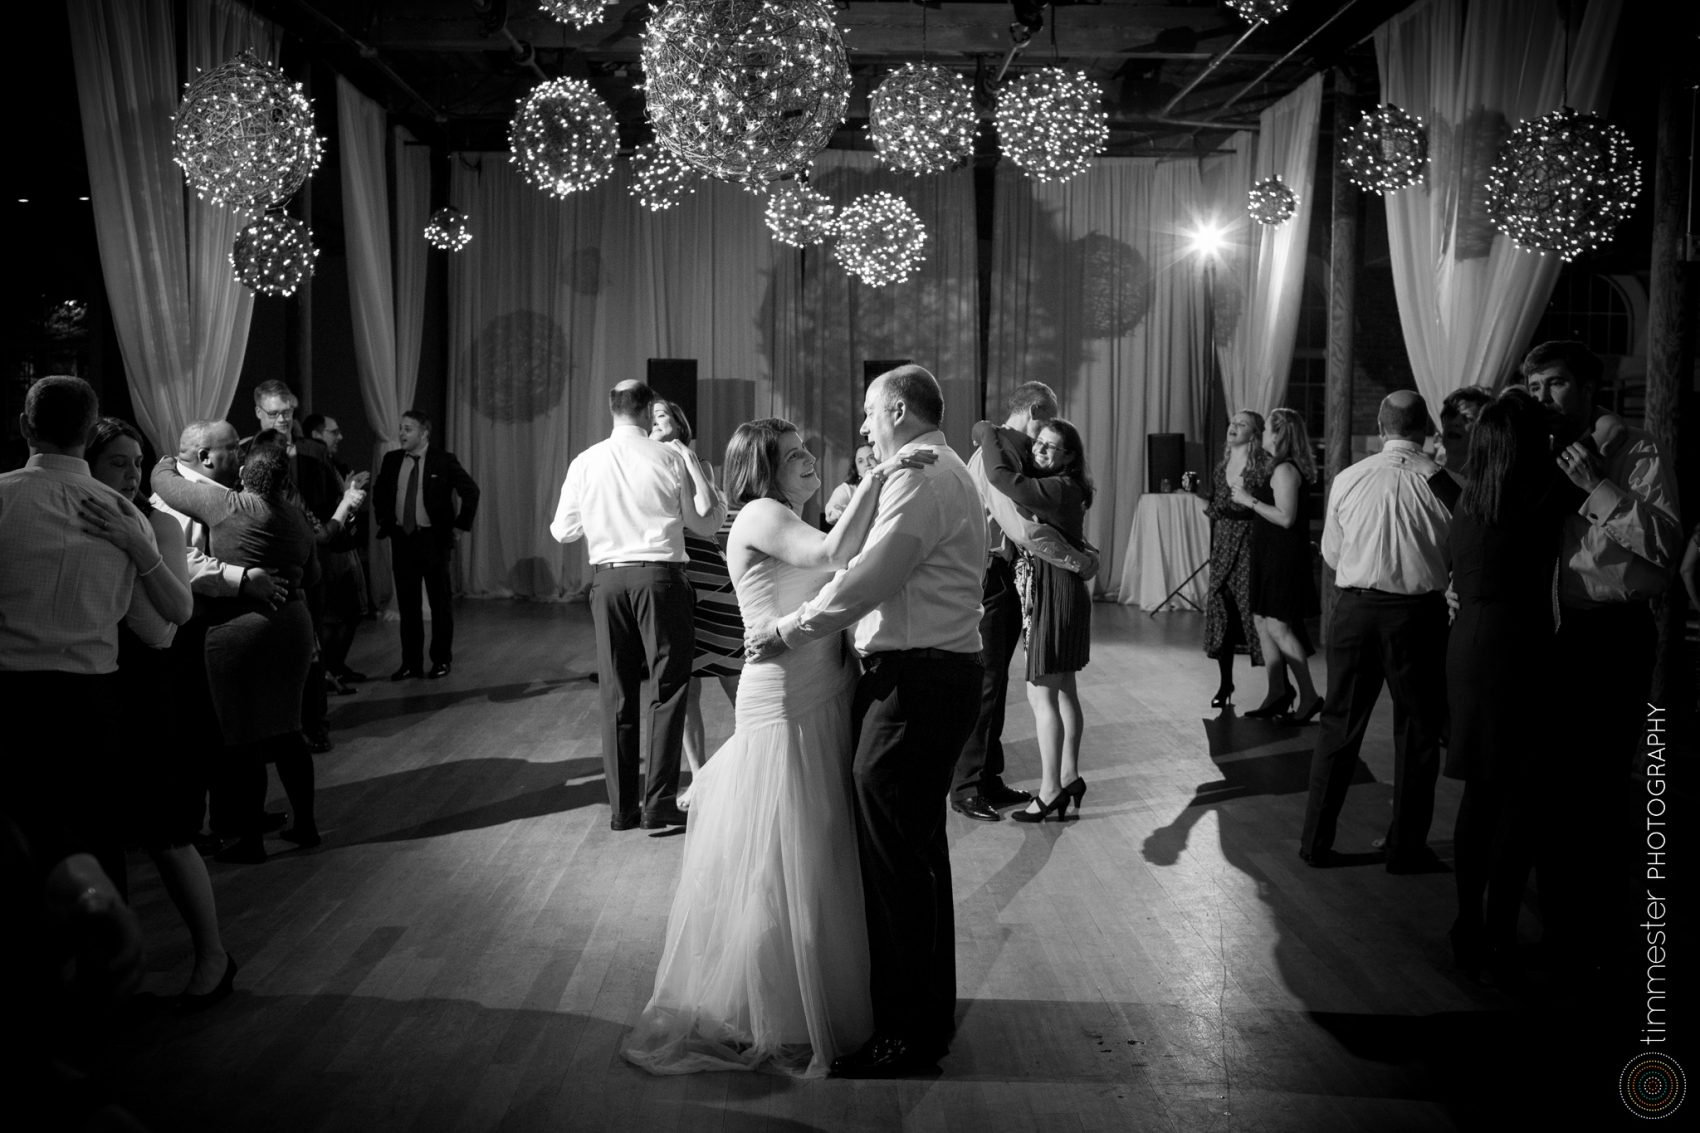 Jessica + David's wedding at The Cotton Room in Durham, North Carolina.